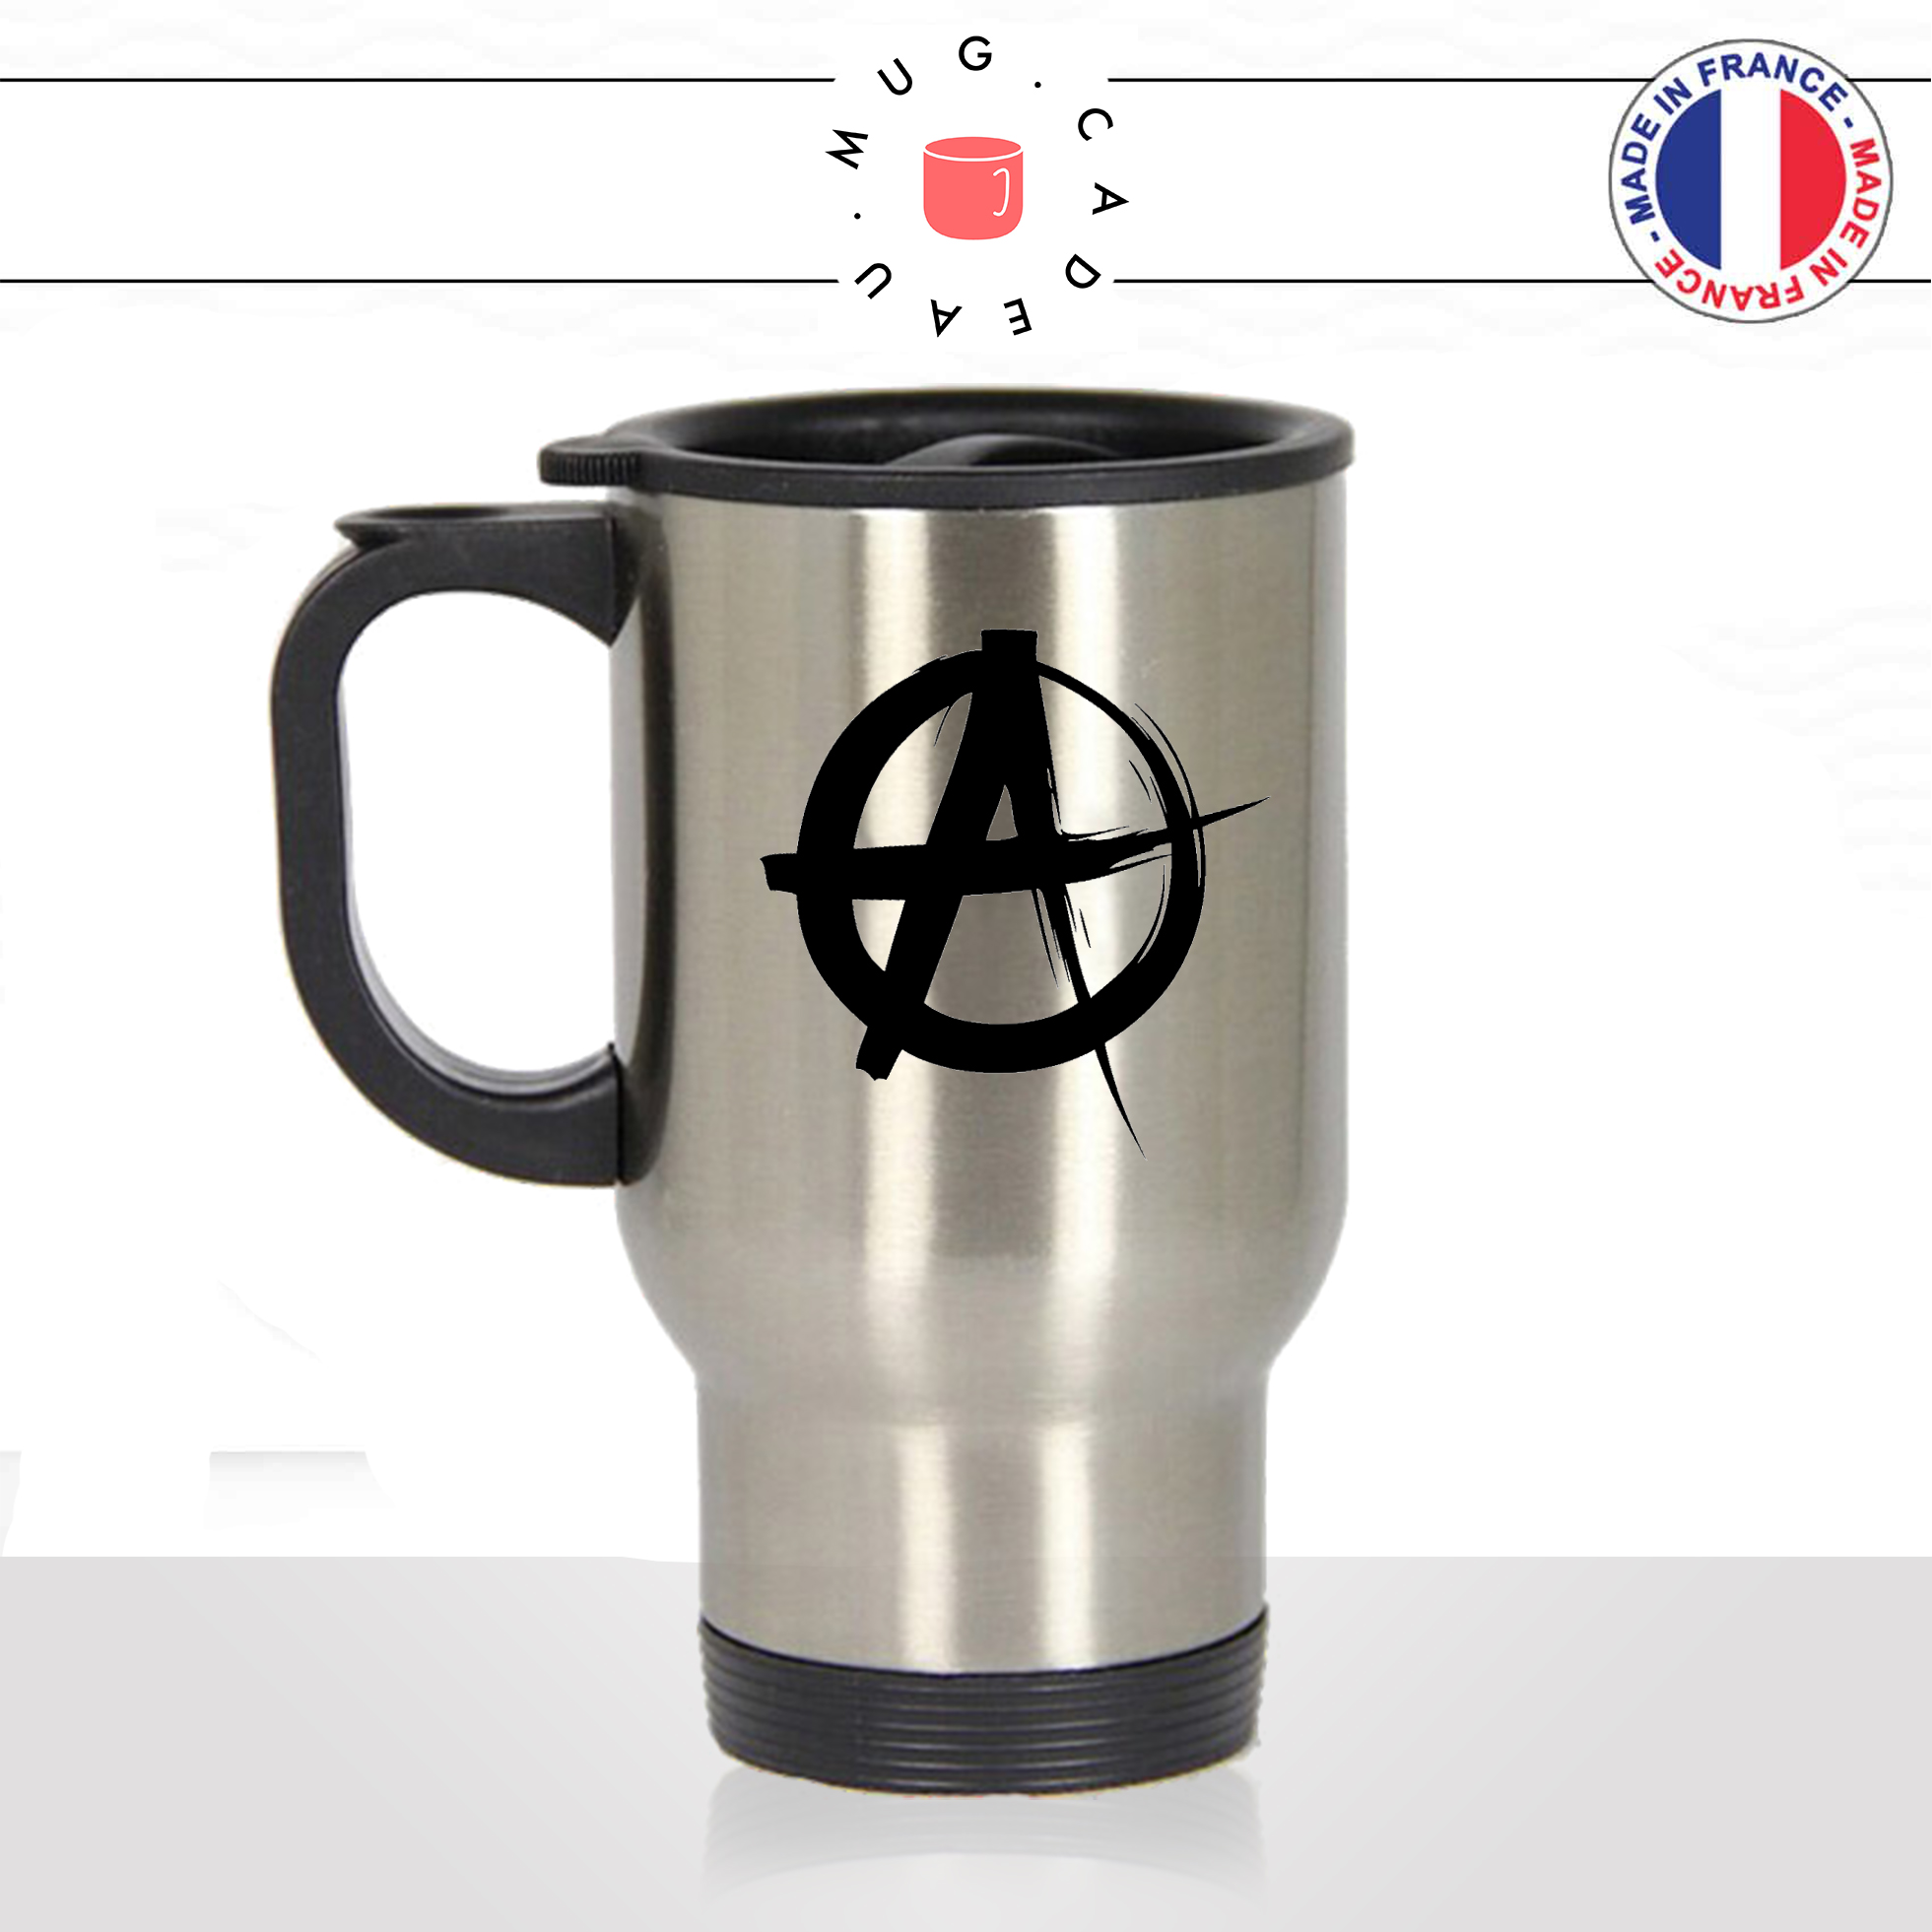 mug-tasse-voyage-thermos-chaud-idée-cadeau-personnalisé-anarchie-anarchiste-anarchy-a-politique-anti-fa-offrir-original-fun